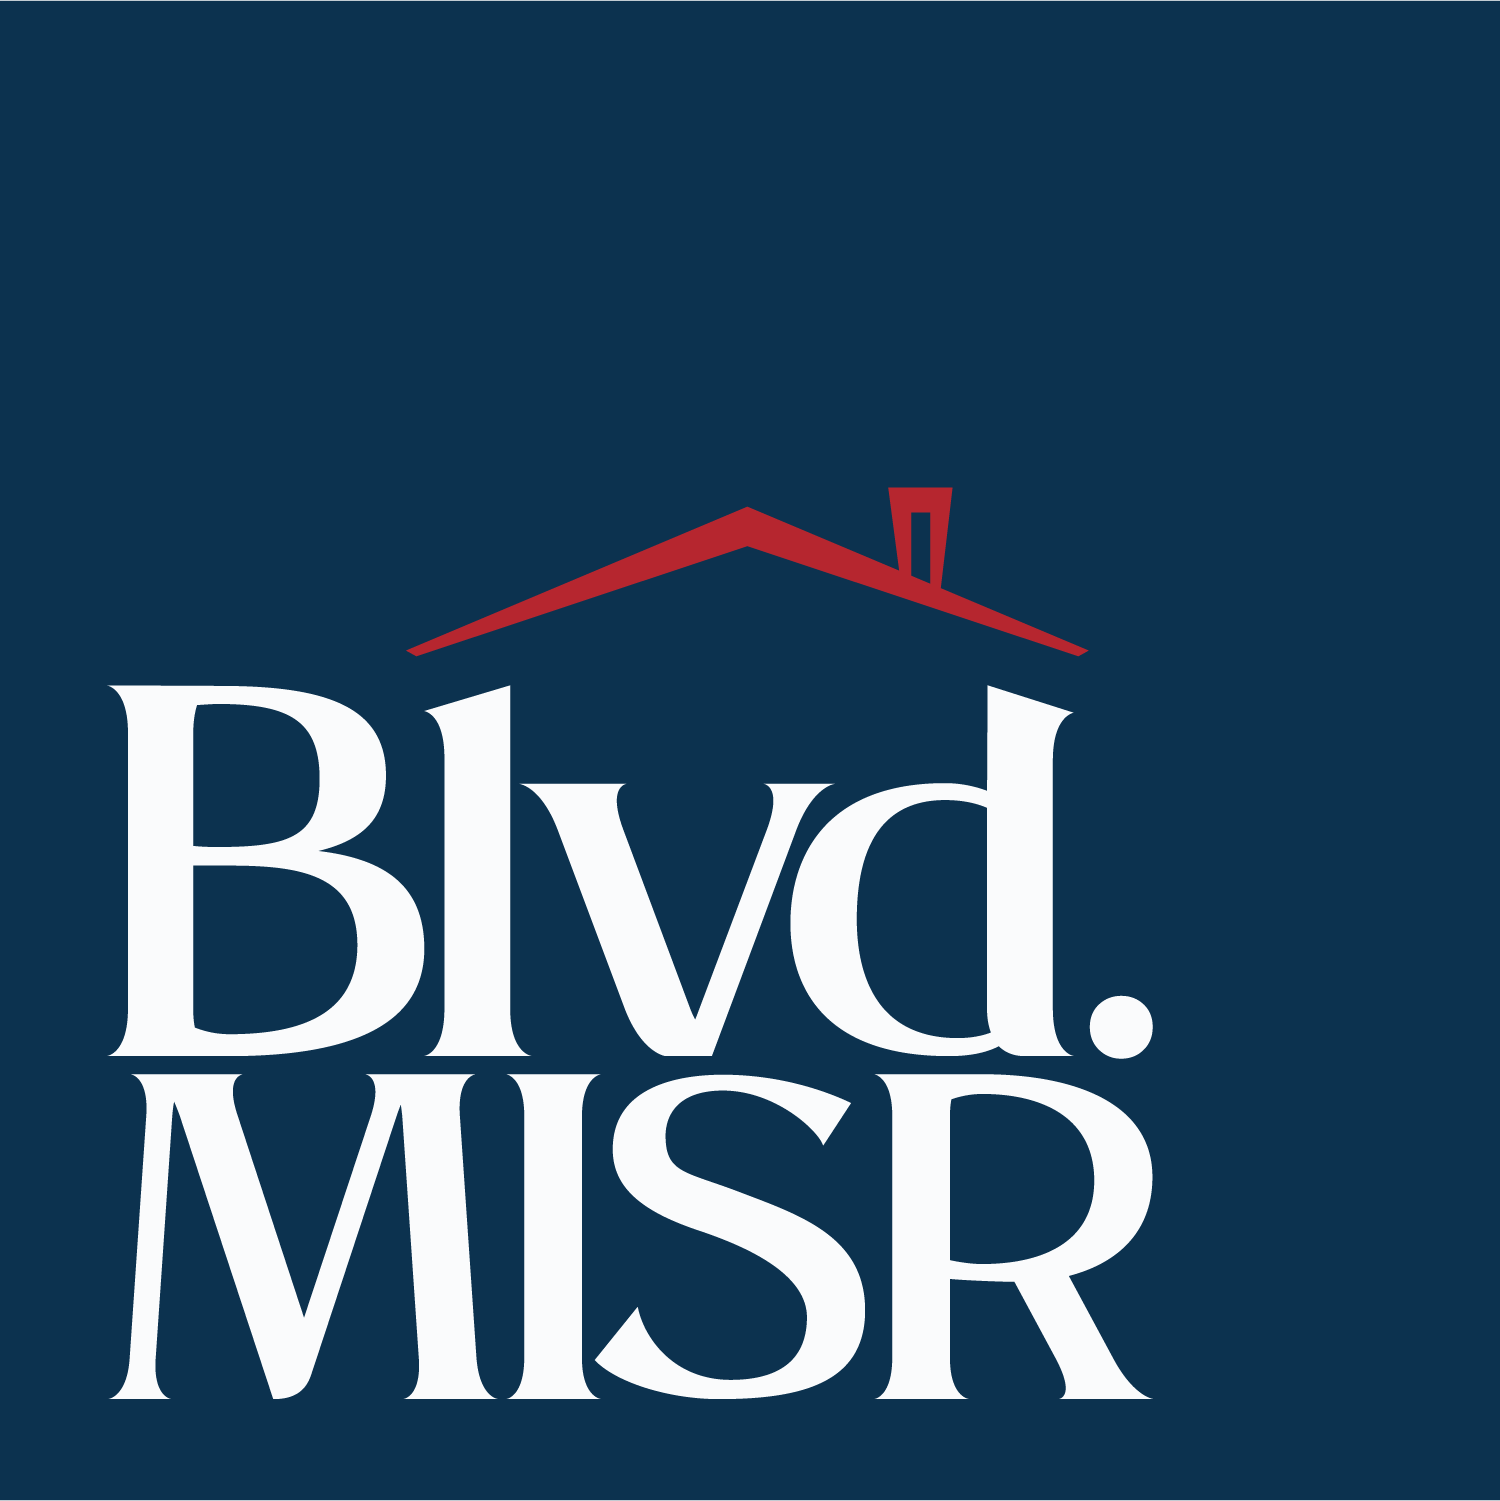 Boulevard Misr Logo